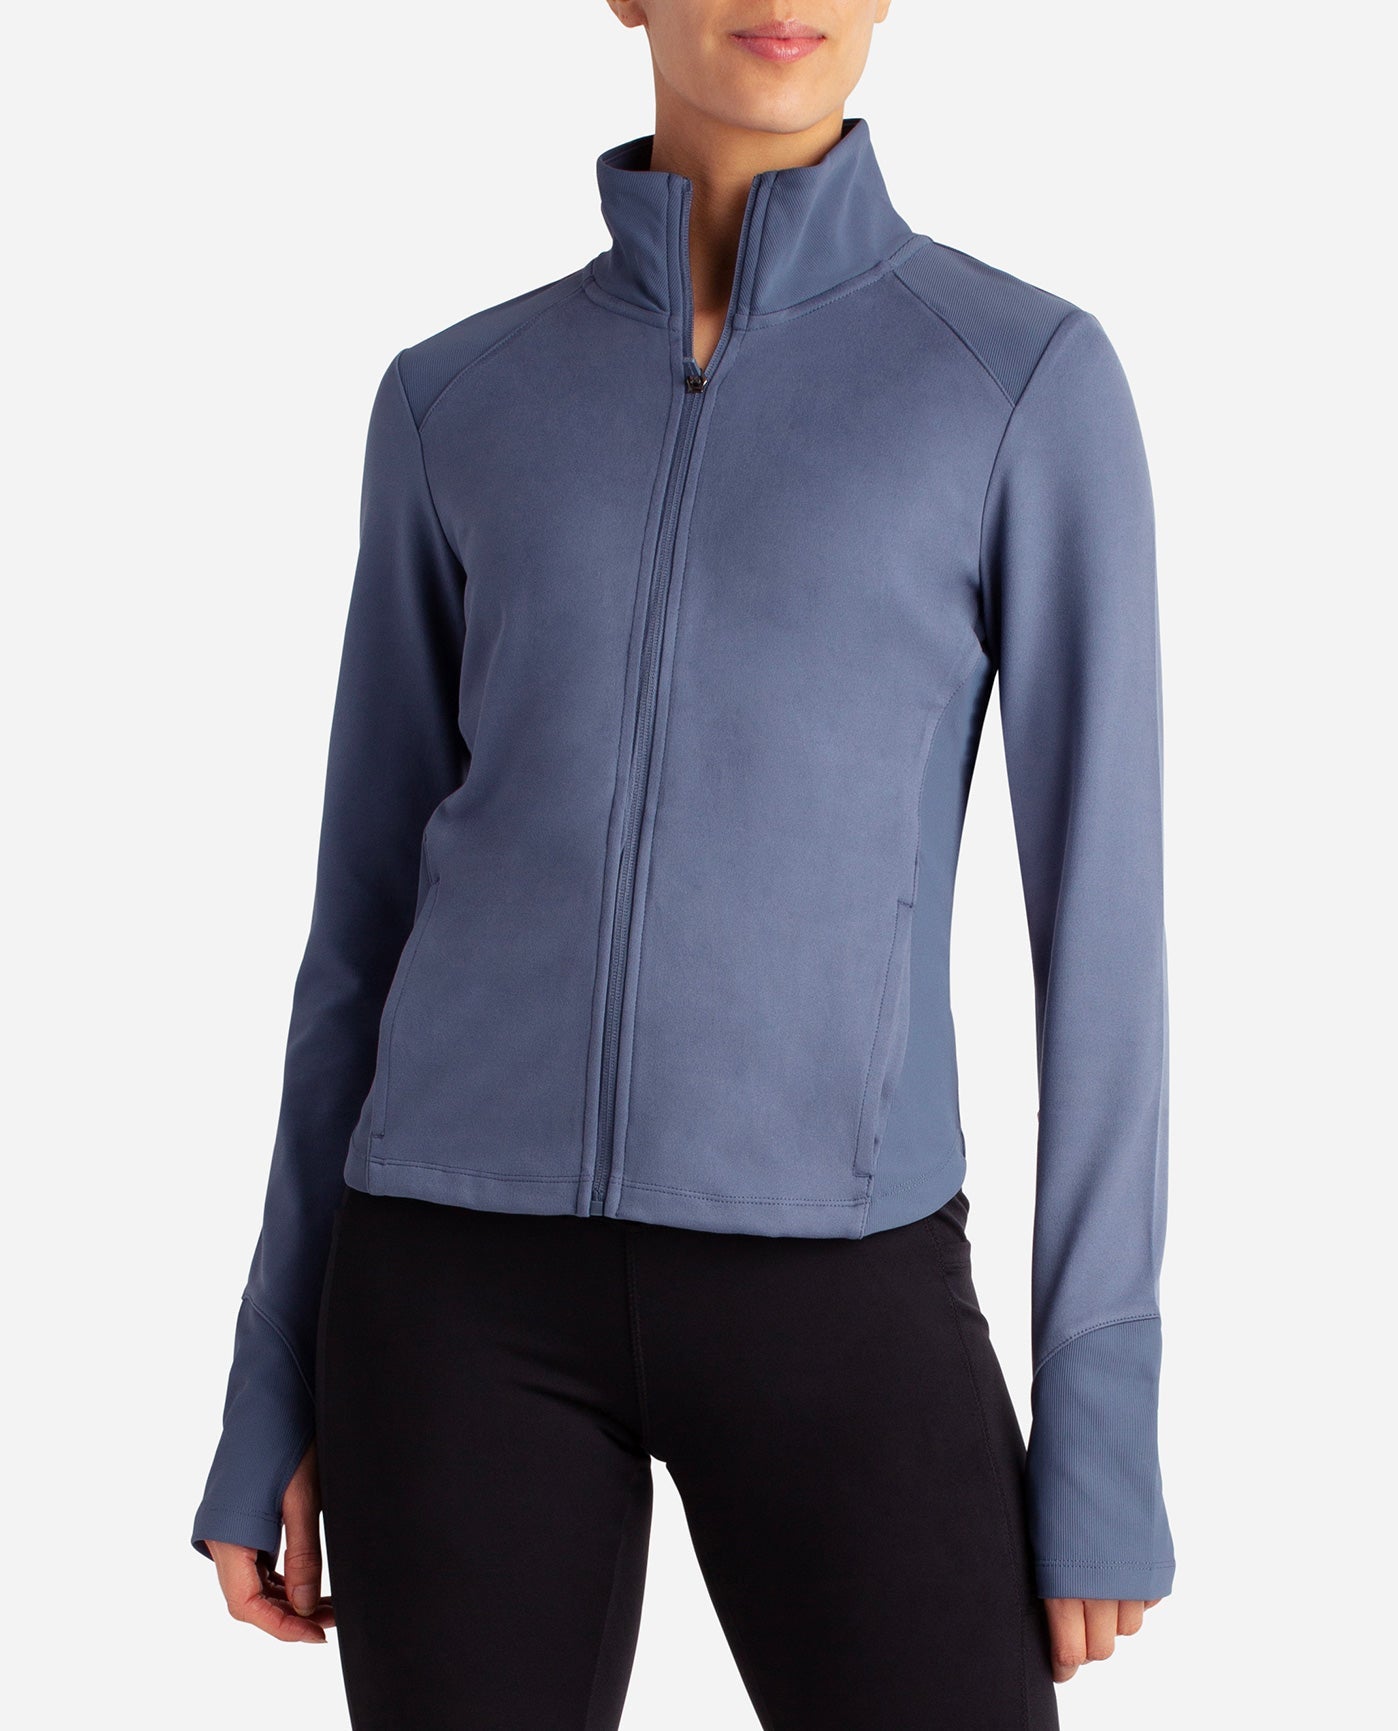 Danskin Now Blue Exercise Jacket, Vintage Workout Zipper Jacket, Size S -   UK